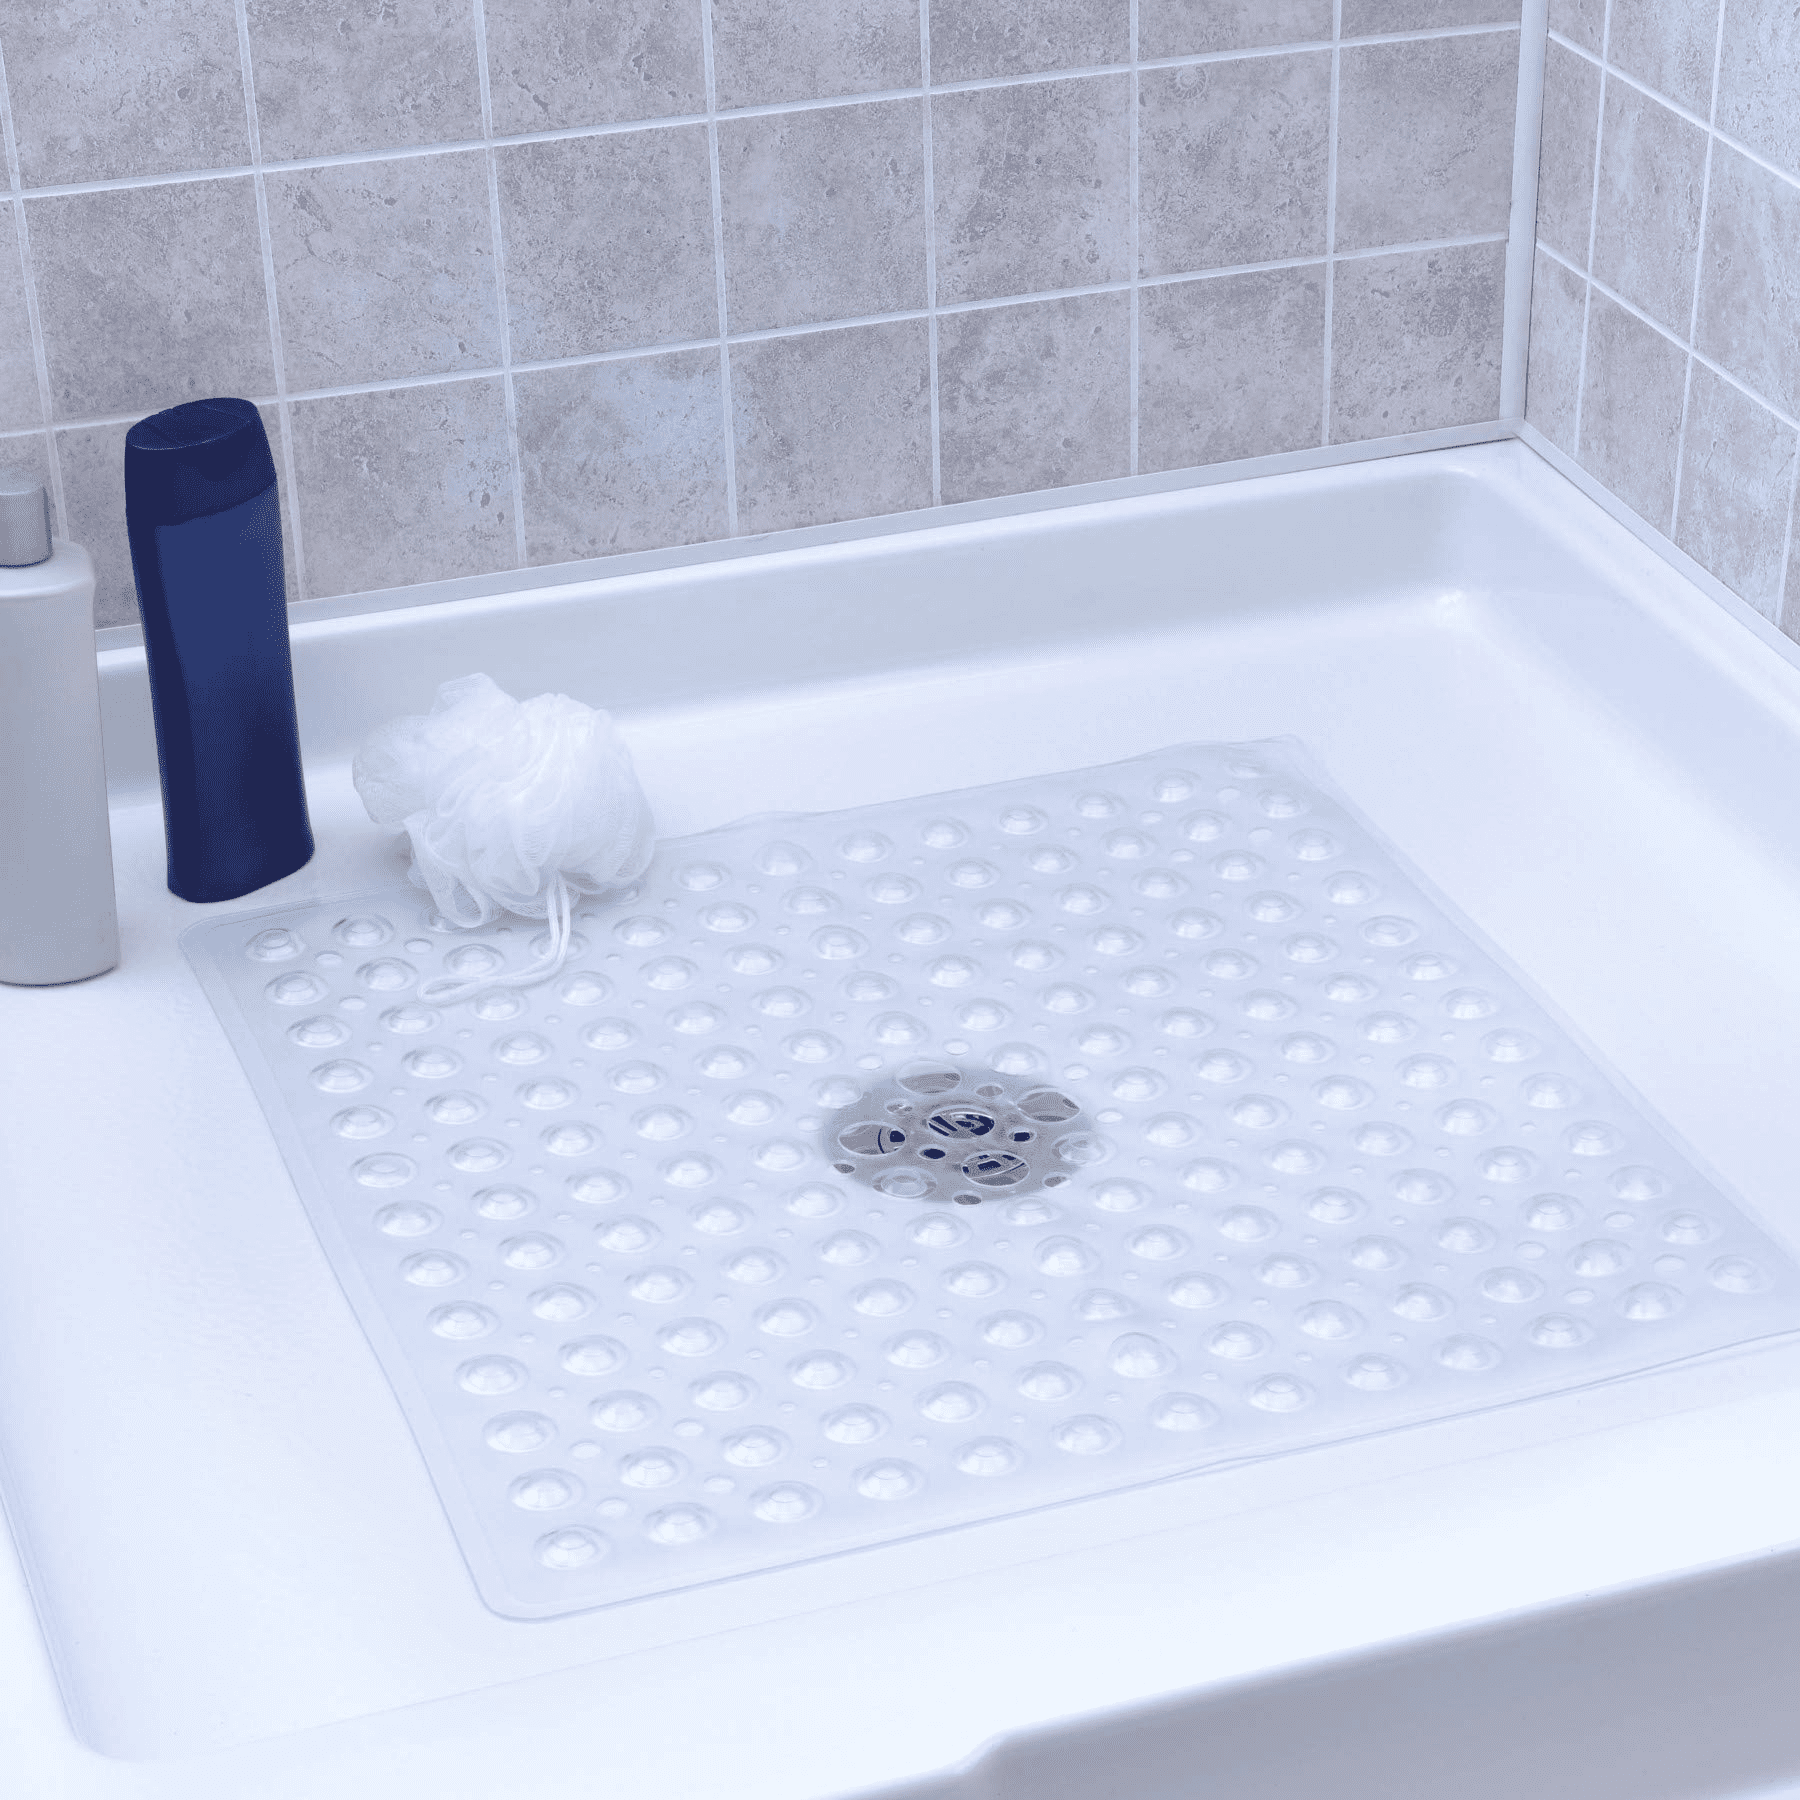 Shower Bath Tub Clear Bubble Mat Safety Non Slip Rubber Floor Suction Cup Grip 